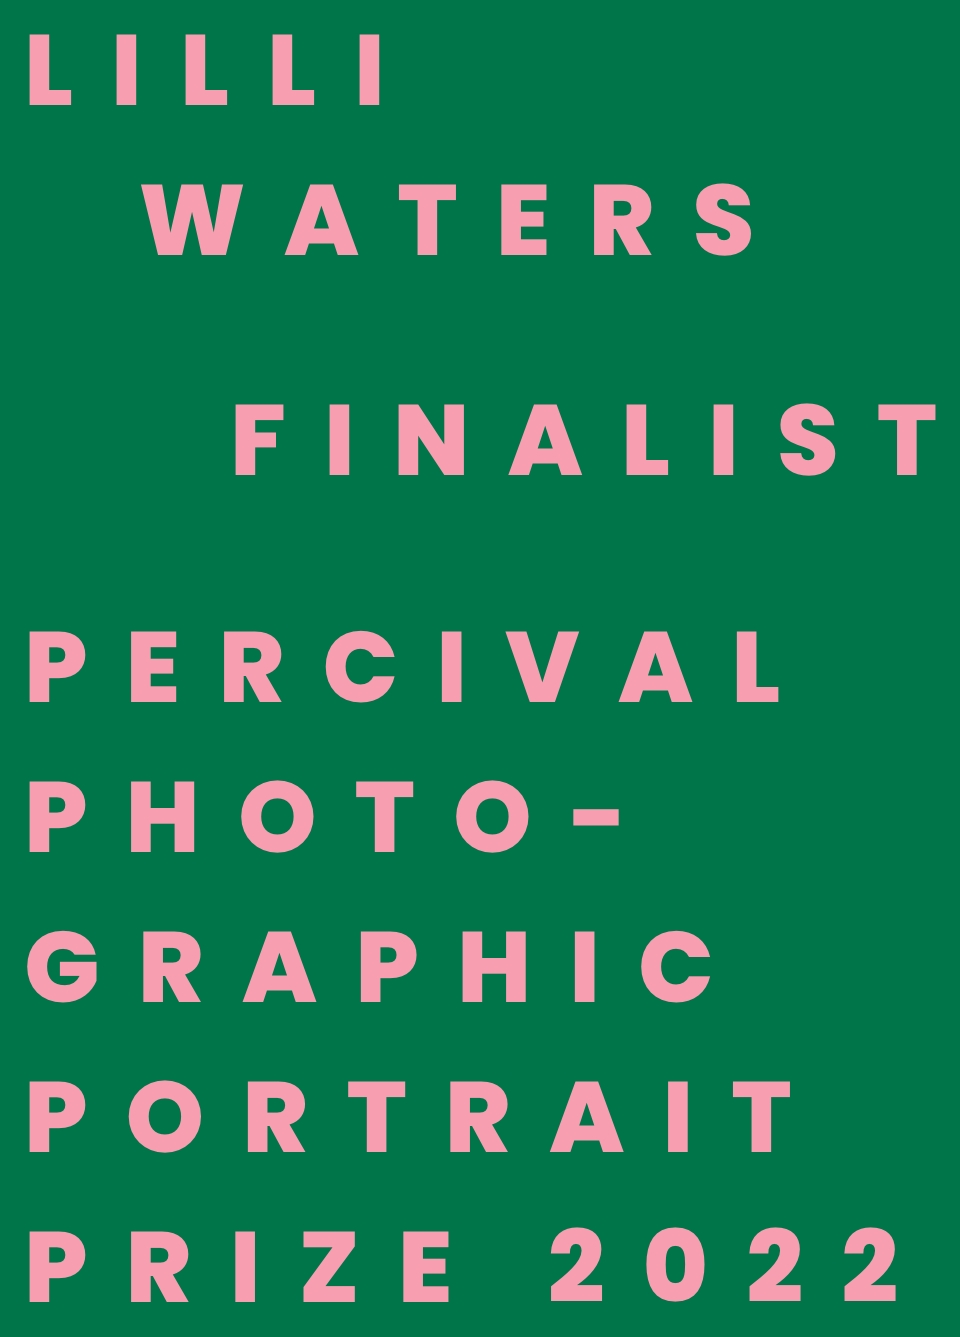 LILLI WATERS FINALIST IN THE PERCIVAL PHOTOGRAPHIC PORTRAIT PRIZE 2022